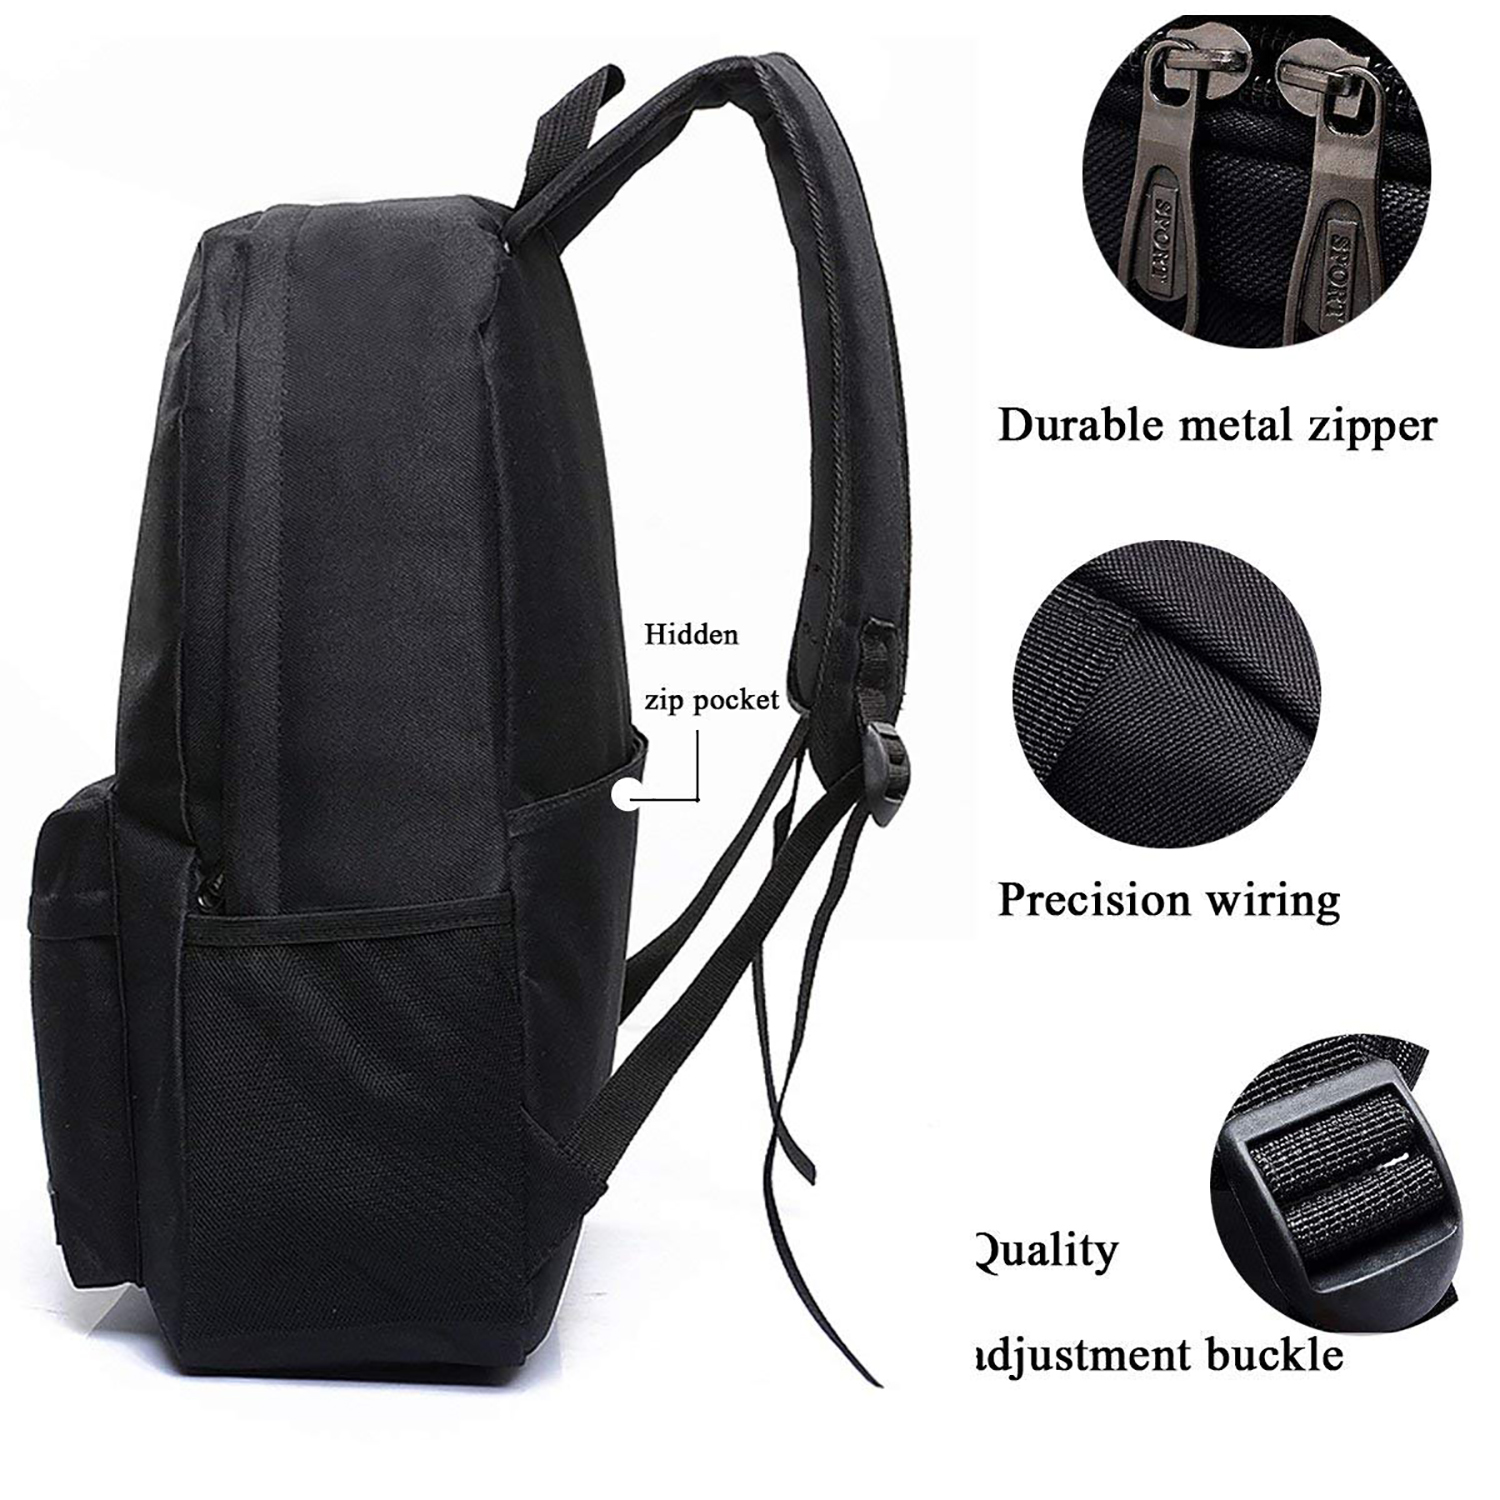 Fortnite Battle Royale School Bookbags Backpack Student School Bookbags Roblox Unisex Notebook Laptop Backpack Travel Bag Fn899 Uk 2019 From